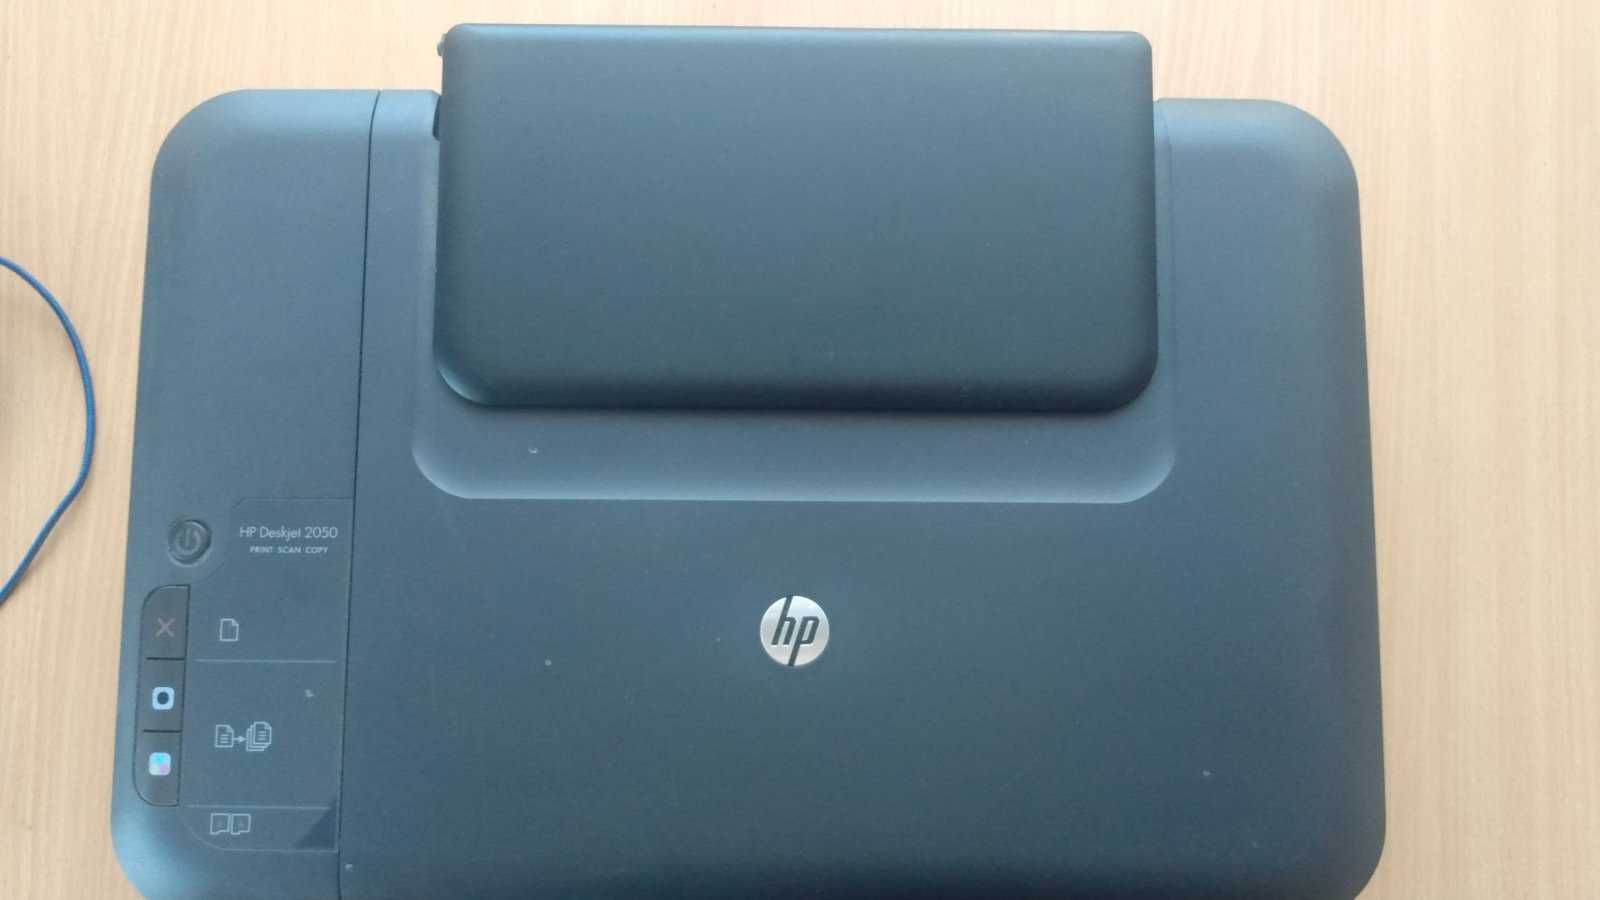 Принтер HP Deskjet 2050 aii- in-one J510 Series